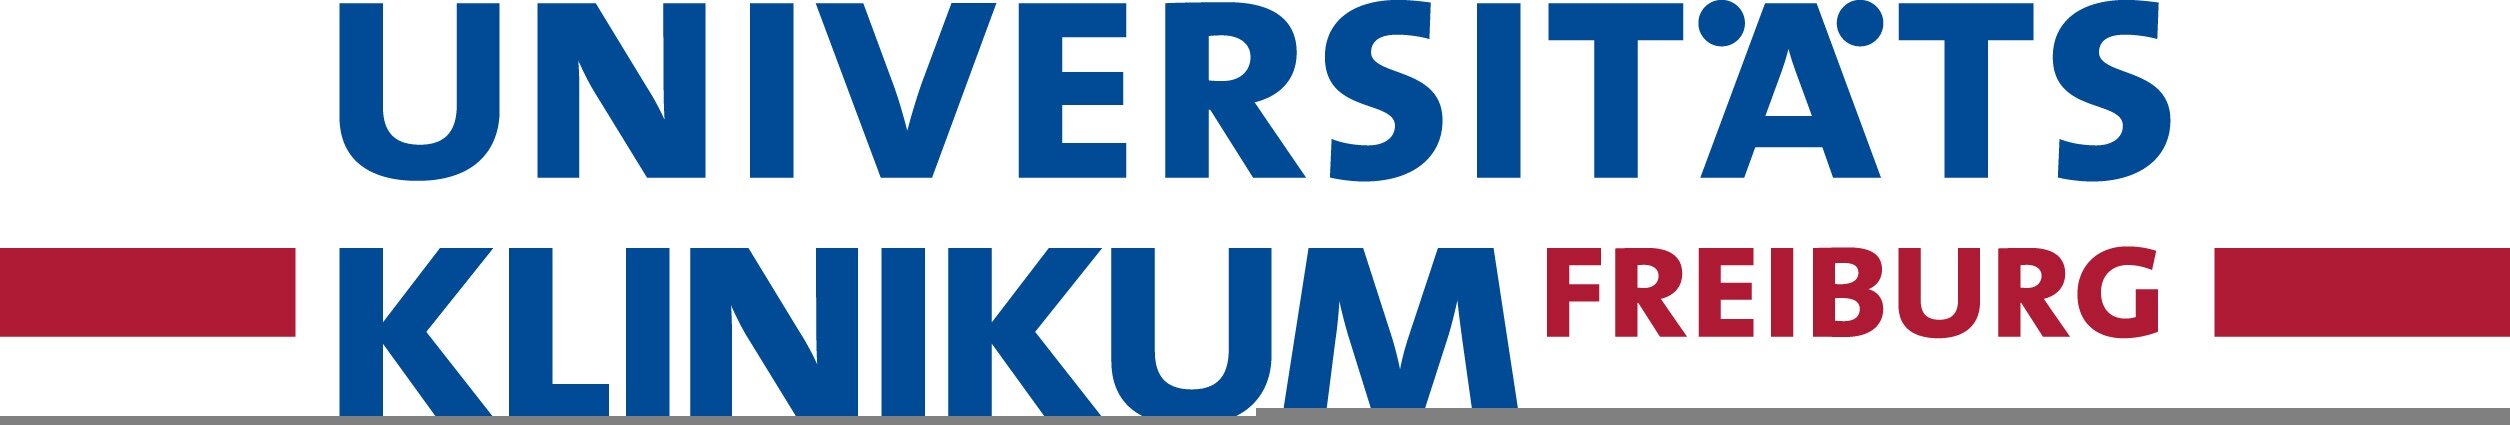 Universitätsklinikum Freiburg (UKF) 